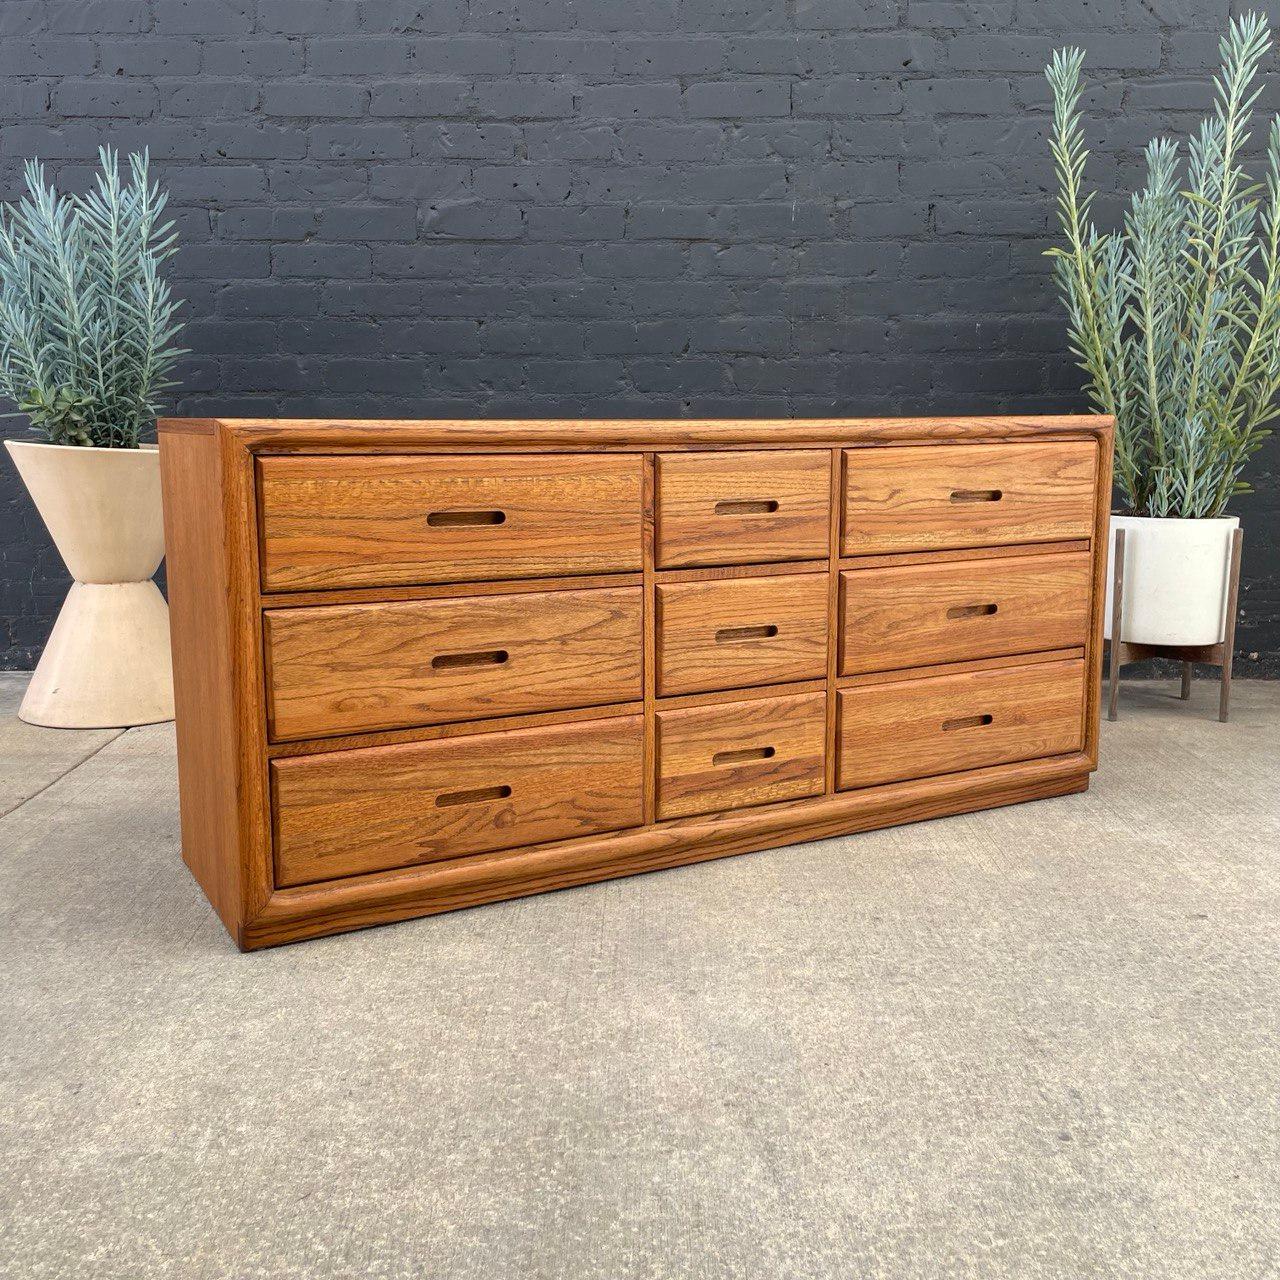 Mid-Century Modern Oak 9-Drawer Dresser

Original Vintage Condition

Dimensions: 28”H x 63”W x 18”D